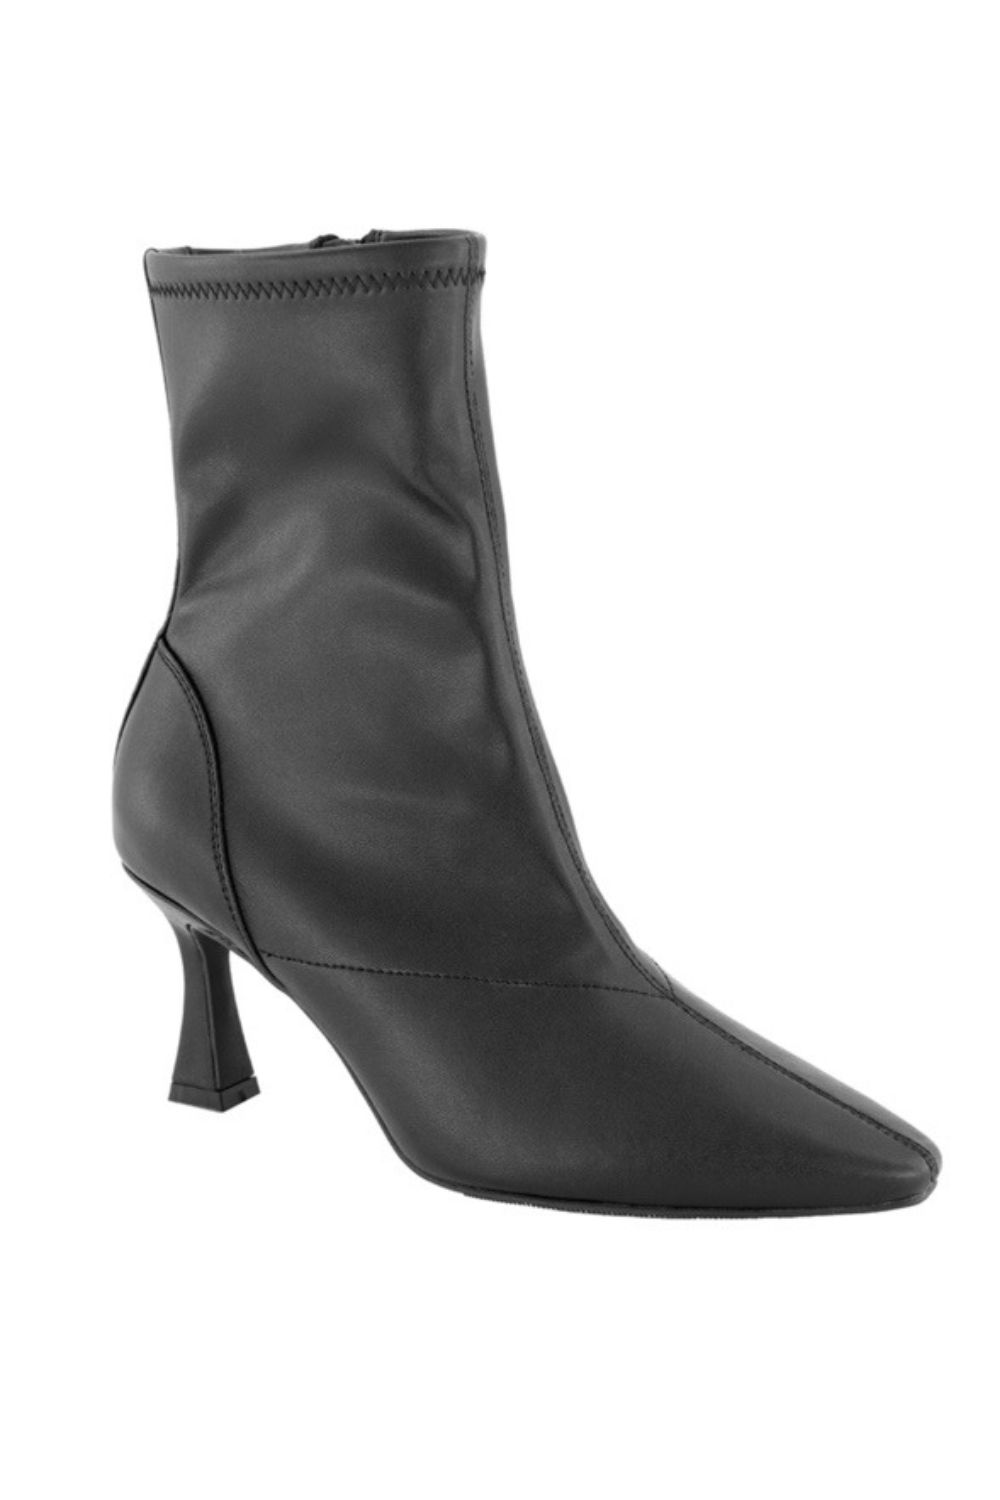 kmart-boots-sock-fit-high-heel